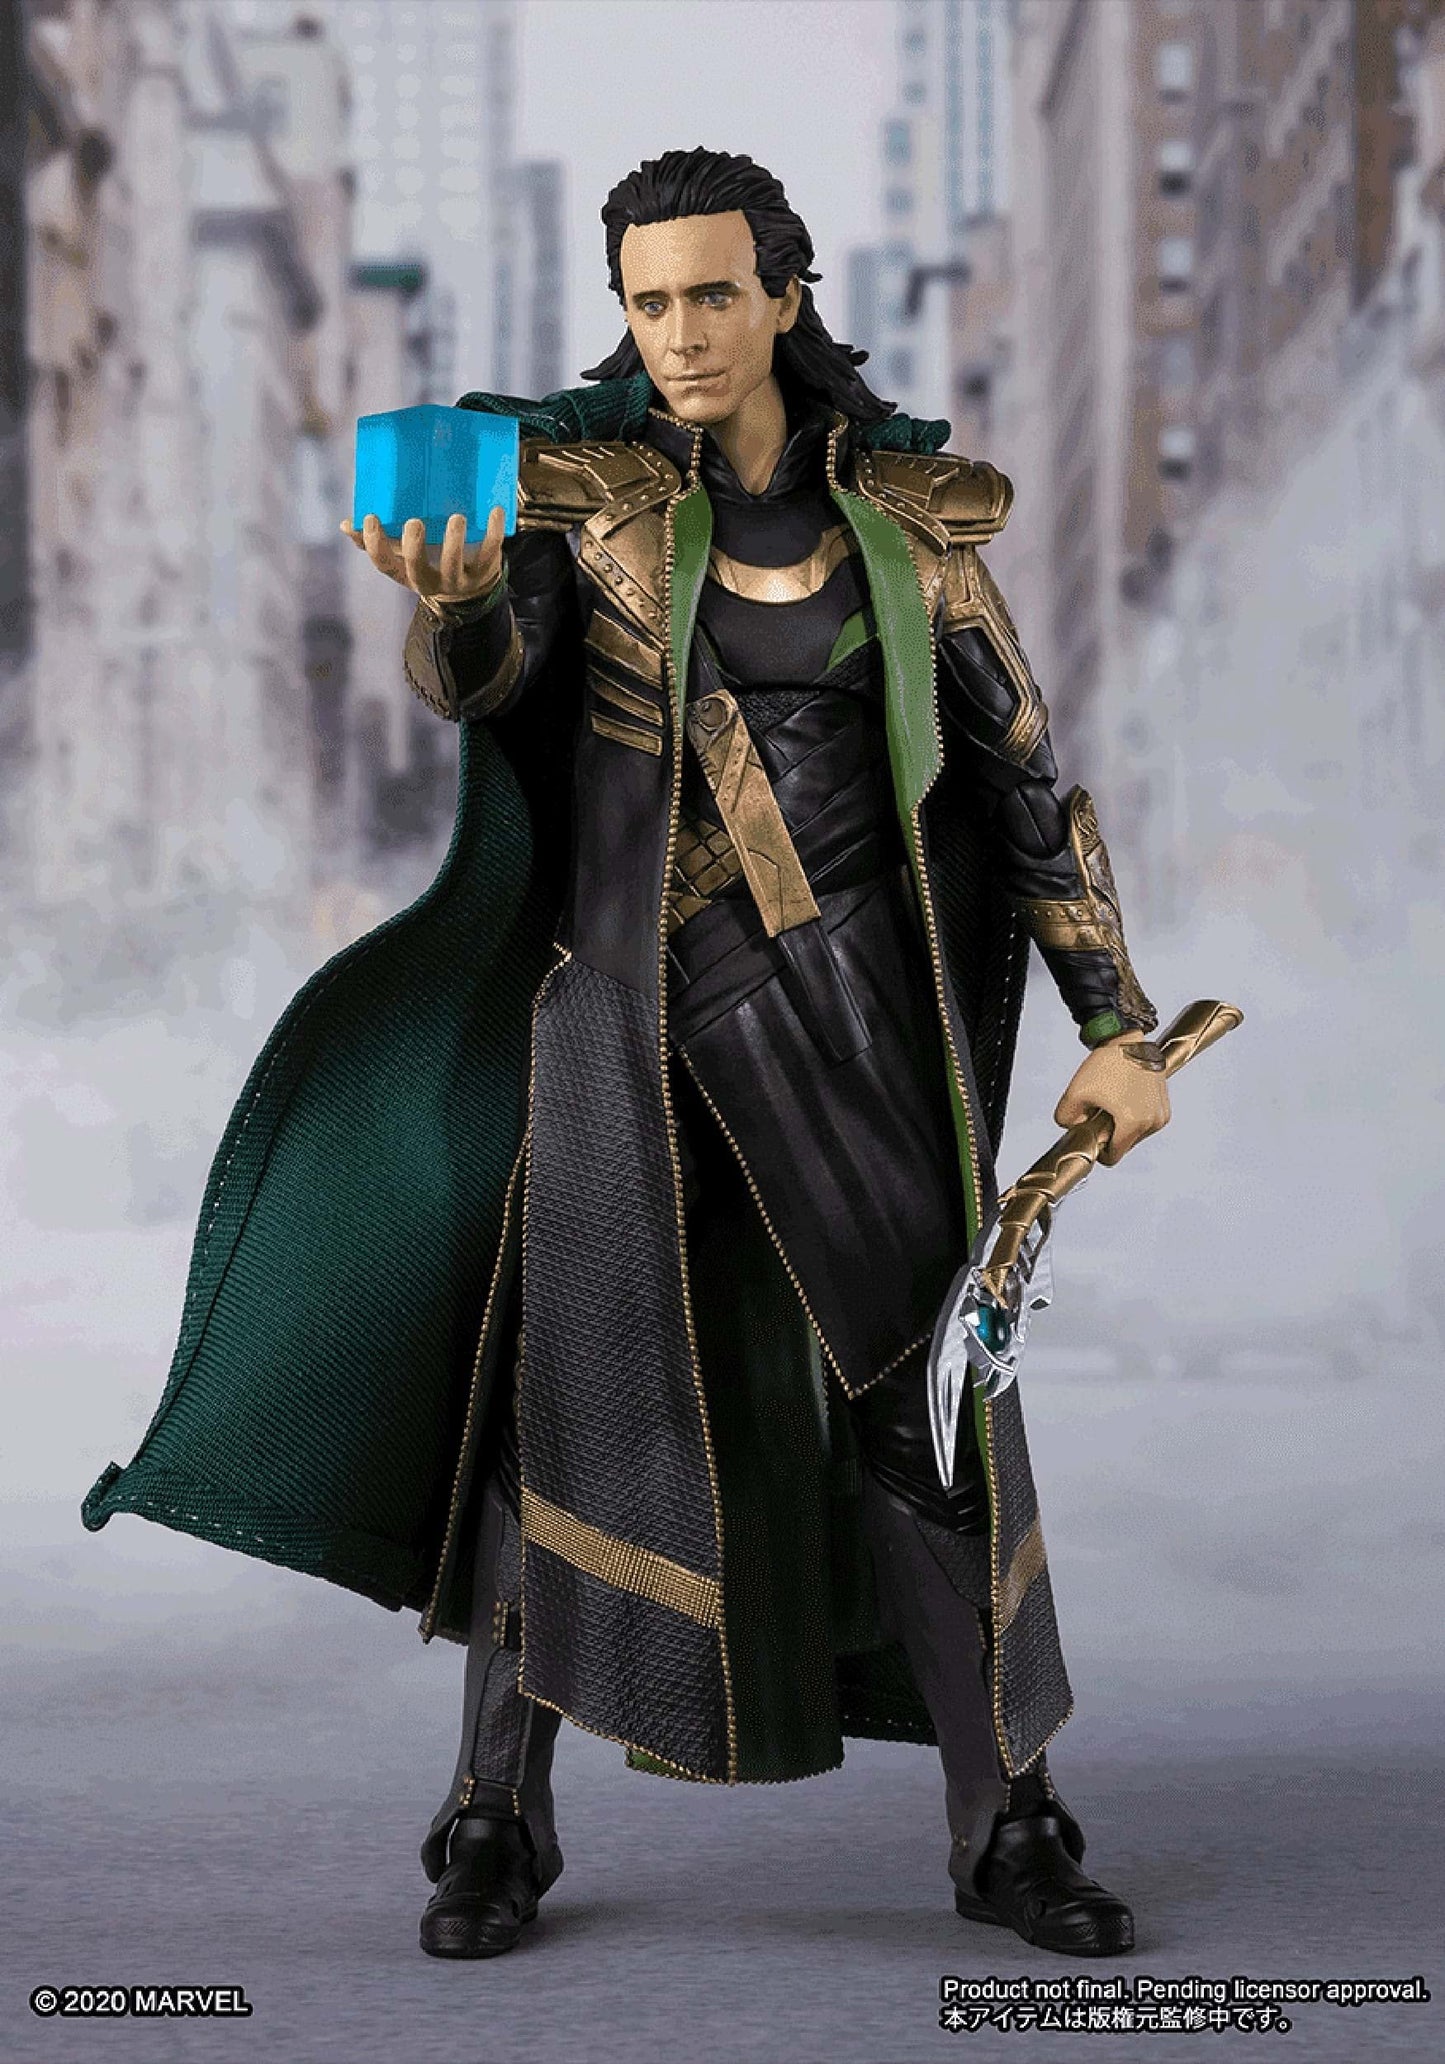 Tamashii Nations S.H.Figuarts - Loki (Avengers) Avengers, Bandai Spirits S.H.Figuarts Figure